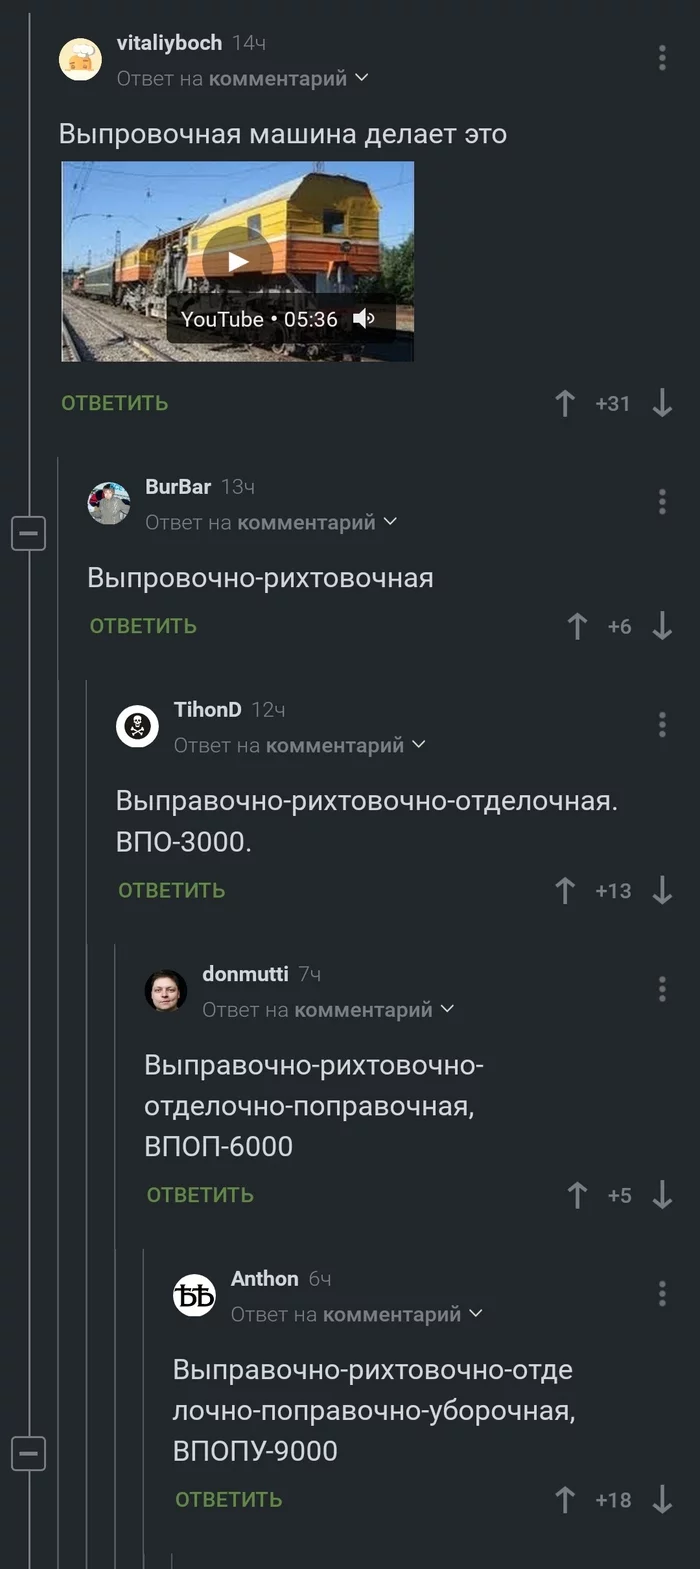 Where where? - Russian Railways, Screenshot, Comments on Peekaboo, Technics, Longpost